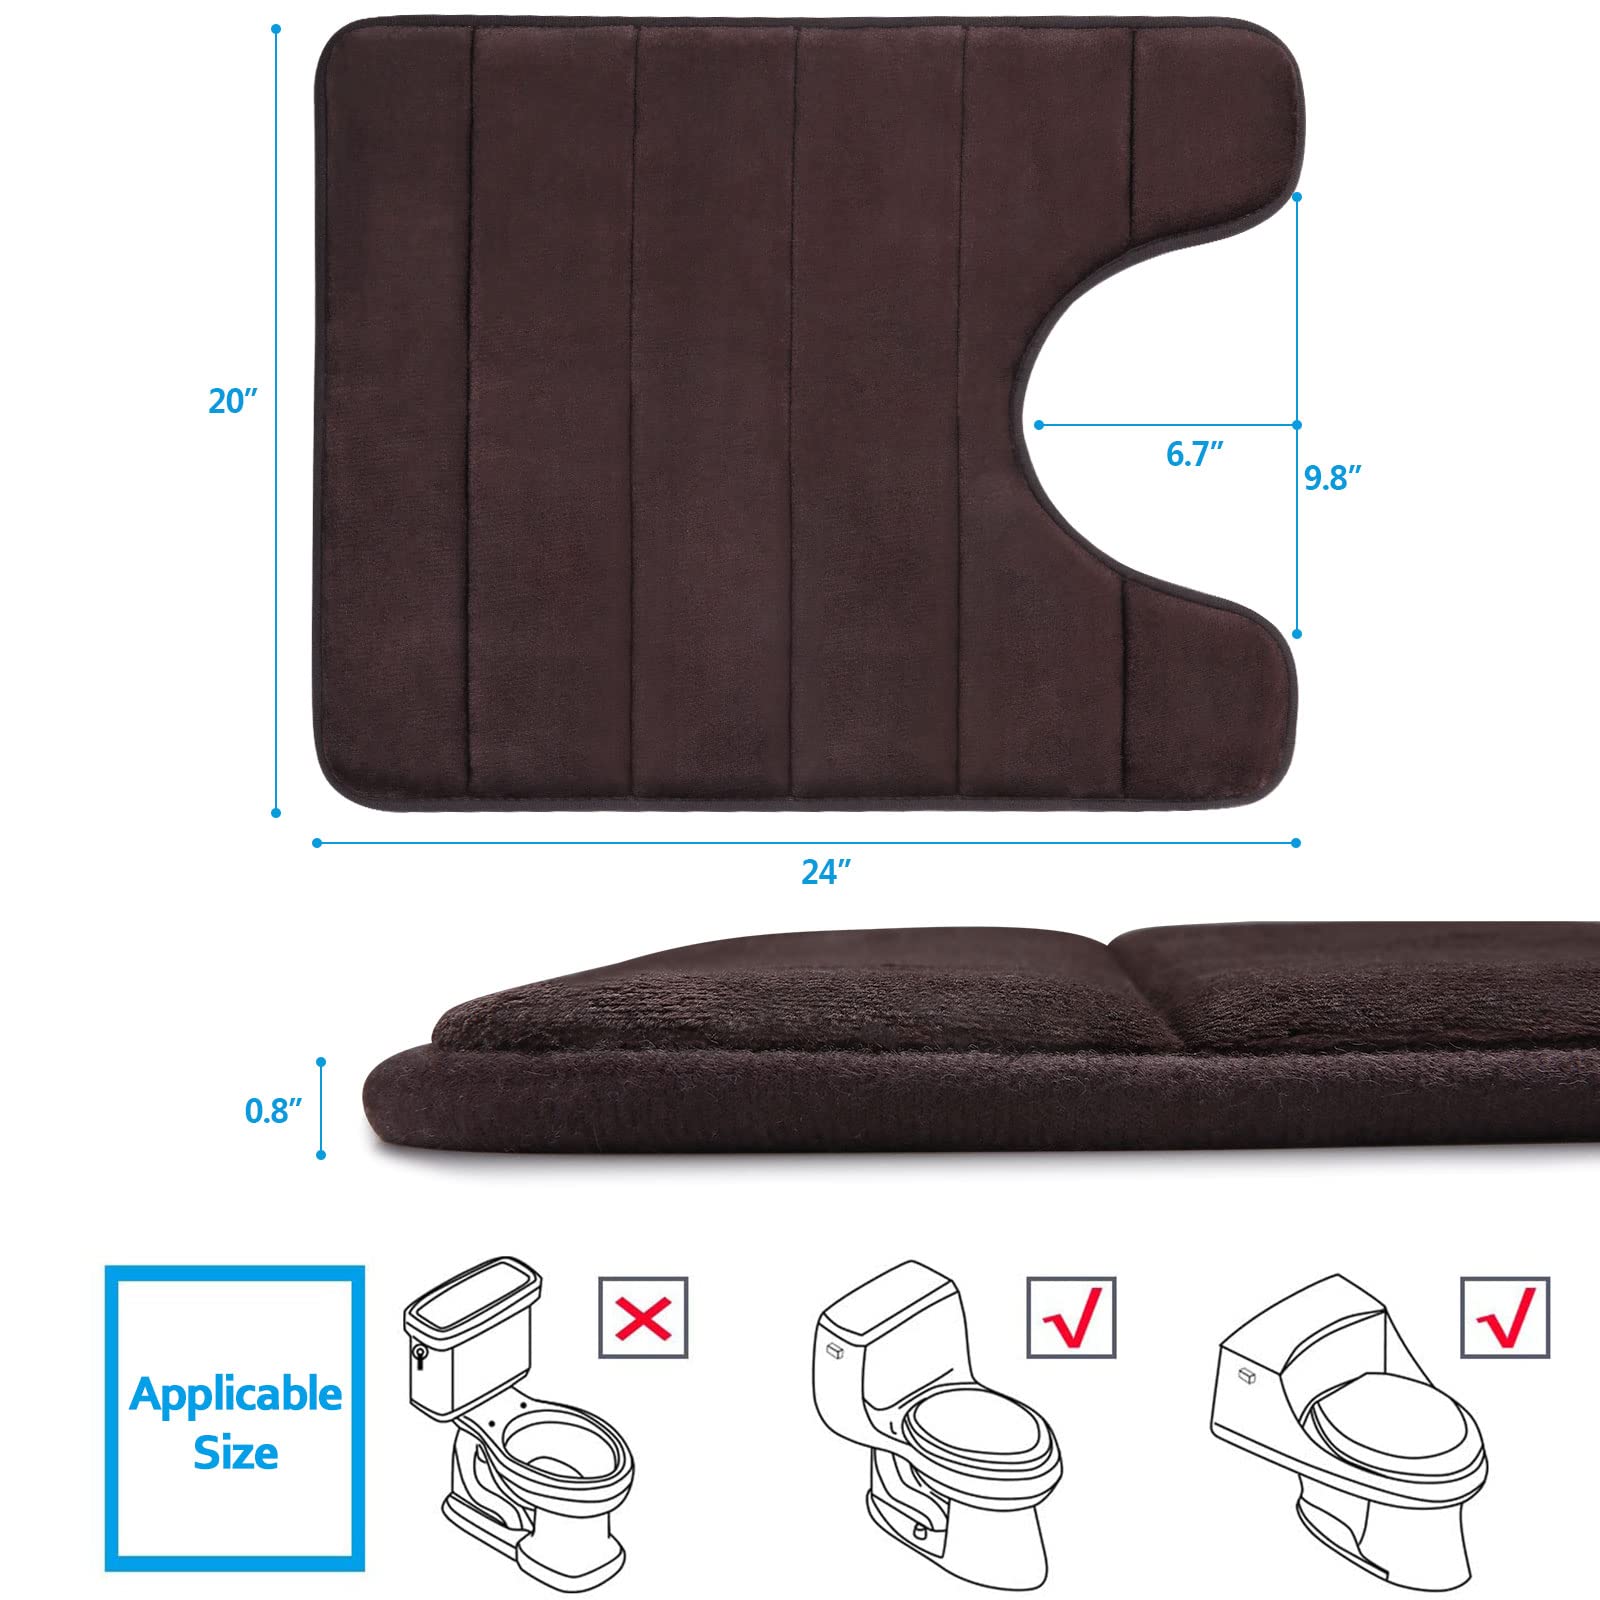 Smiry Memory Foam Bathroom rugs Toilet mats, U-Shaped Contour Carpet, 20" x 24", Coffee - image 5 of 8